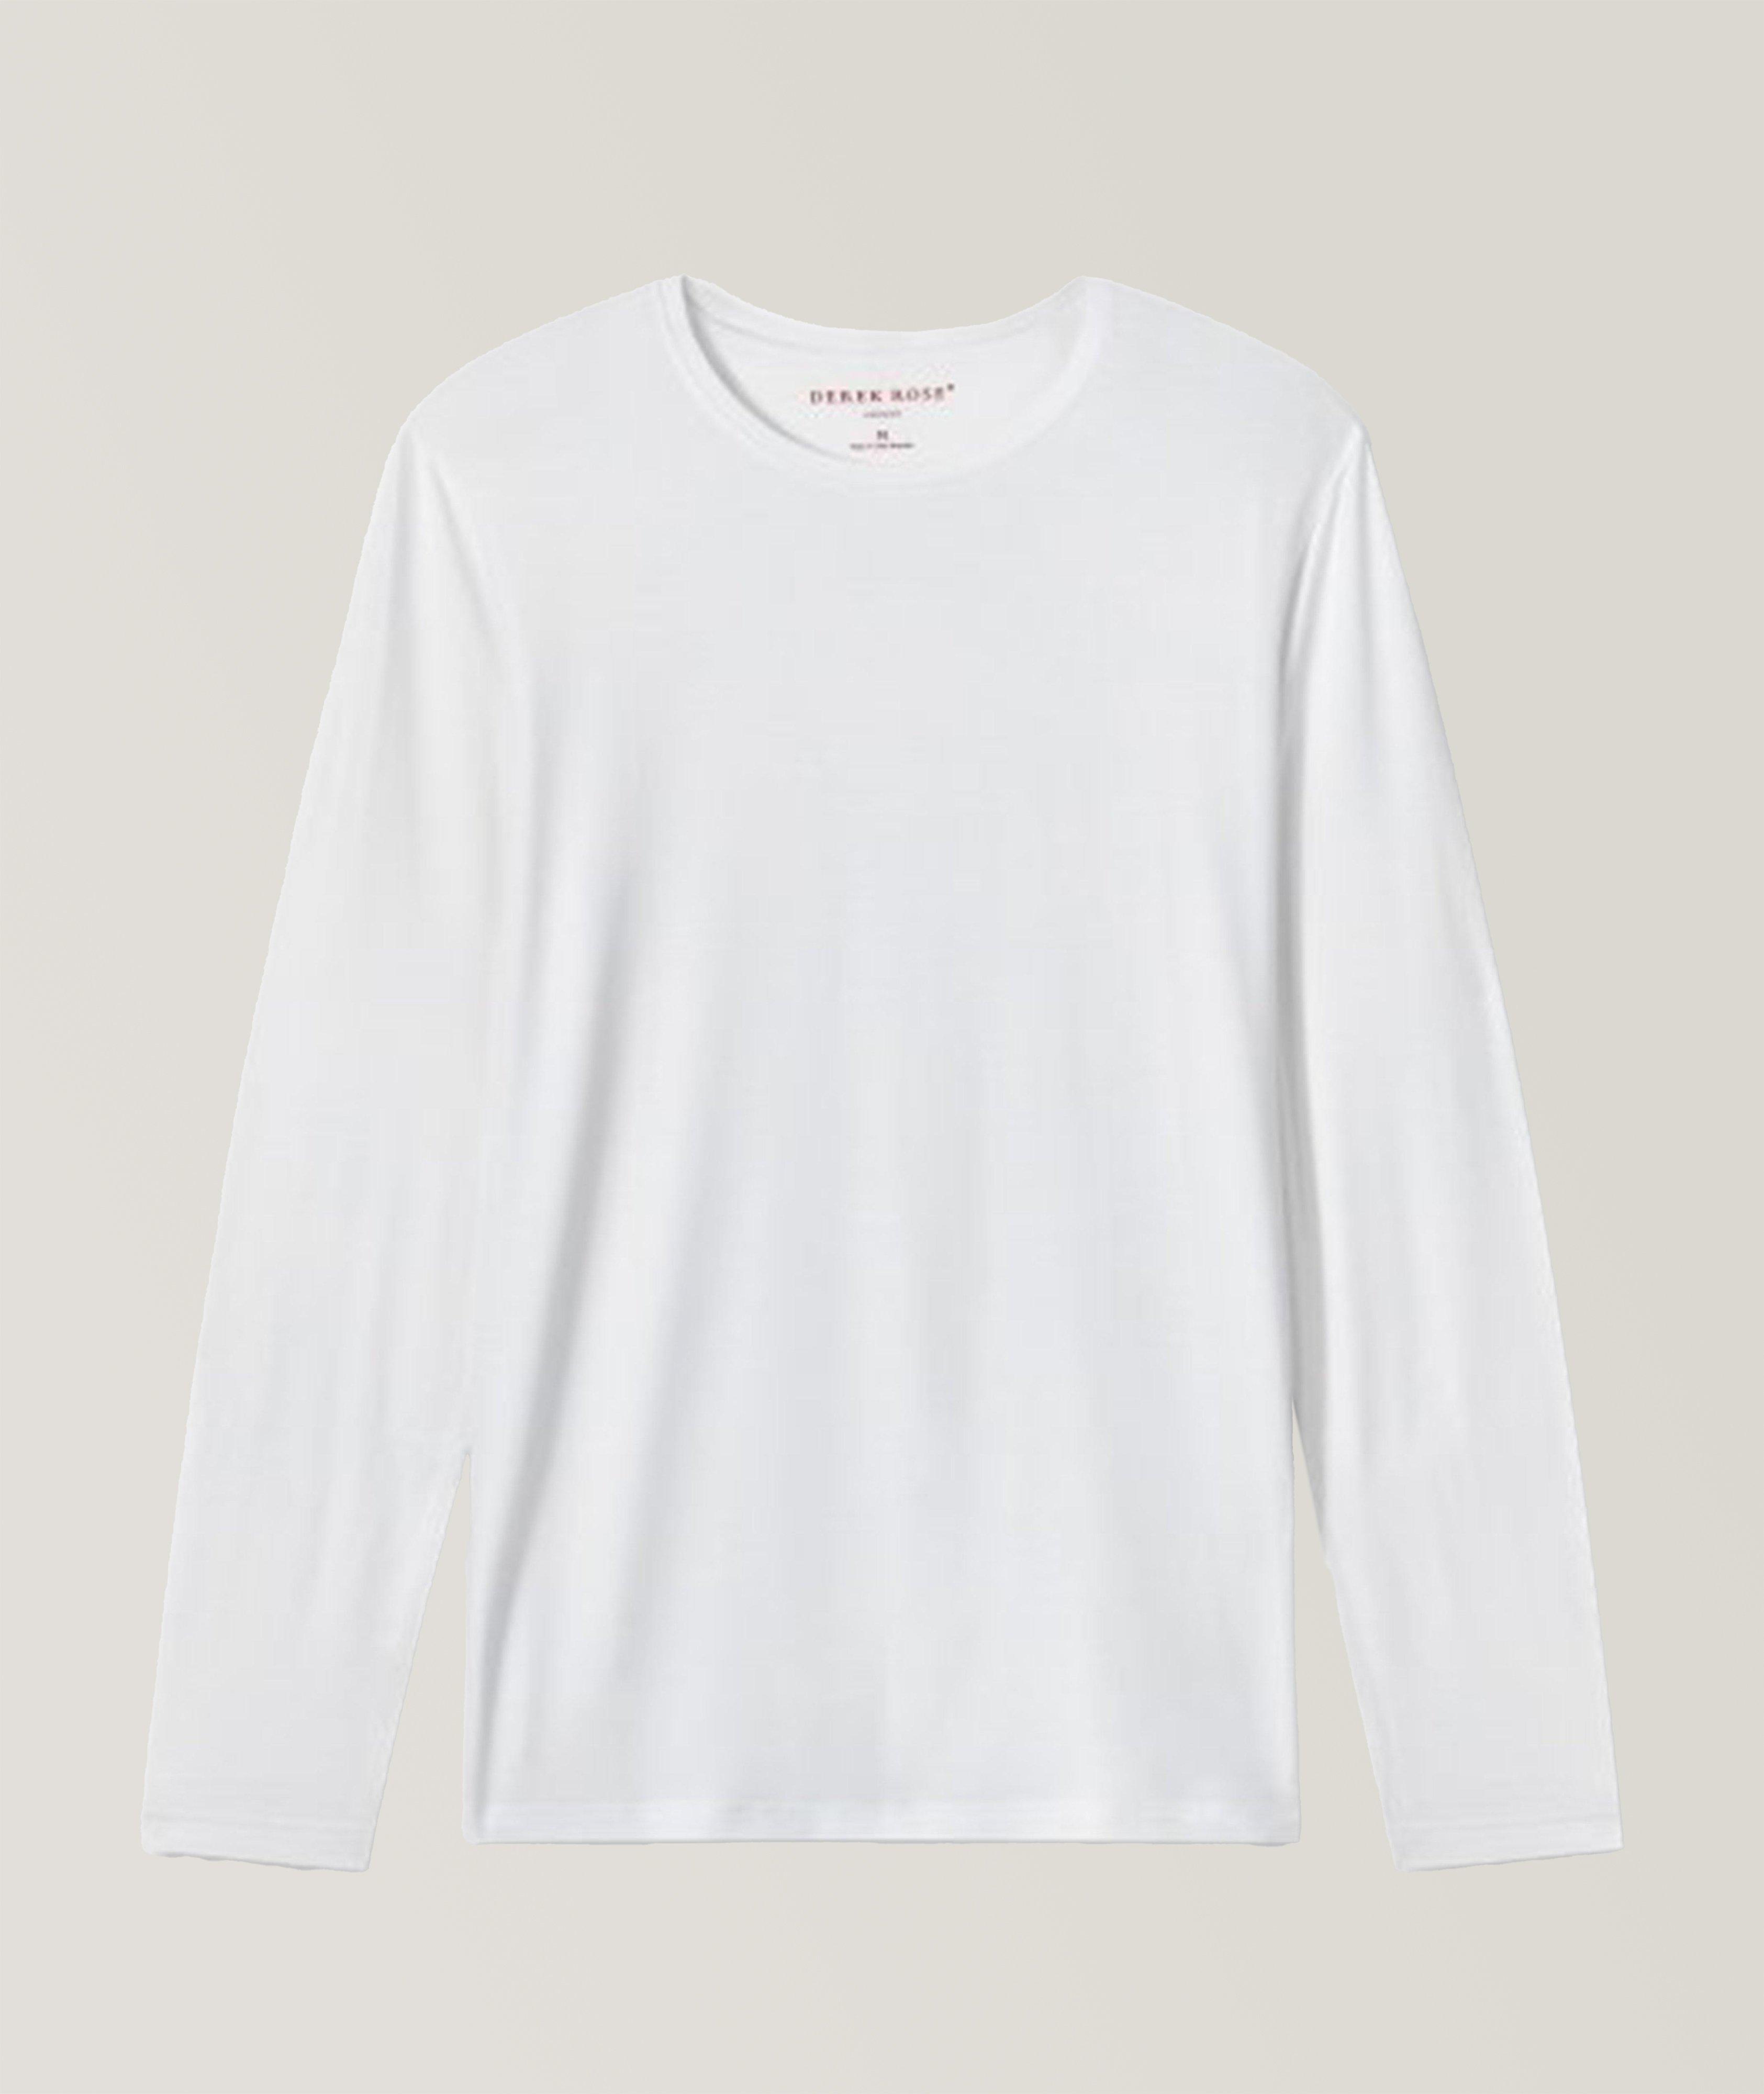 Basel Long-Sleeve Stretch-Micromodal T-Shirt image 0